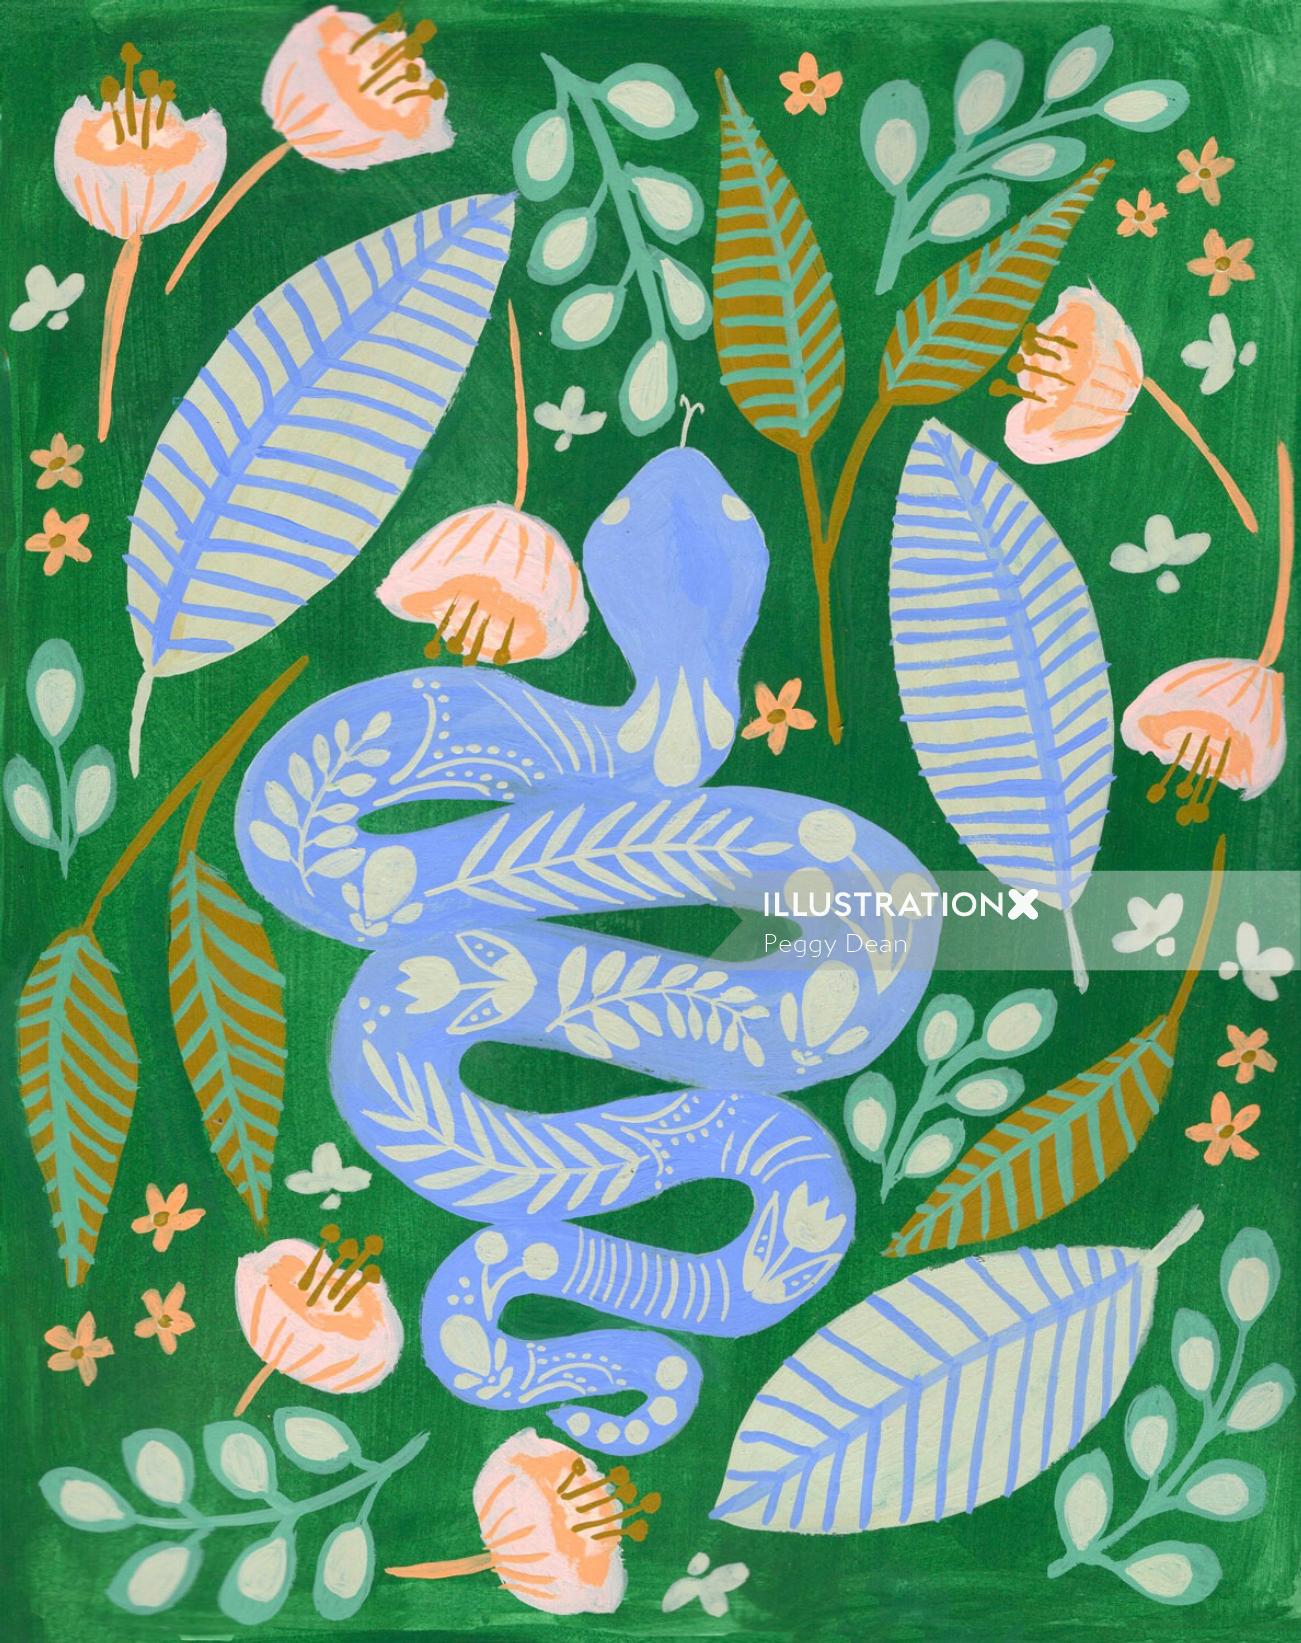 Ilustración de gouache de serpiente por Peggy Dean